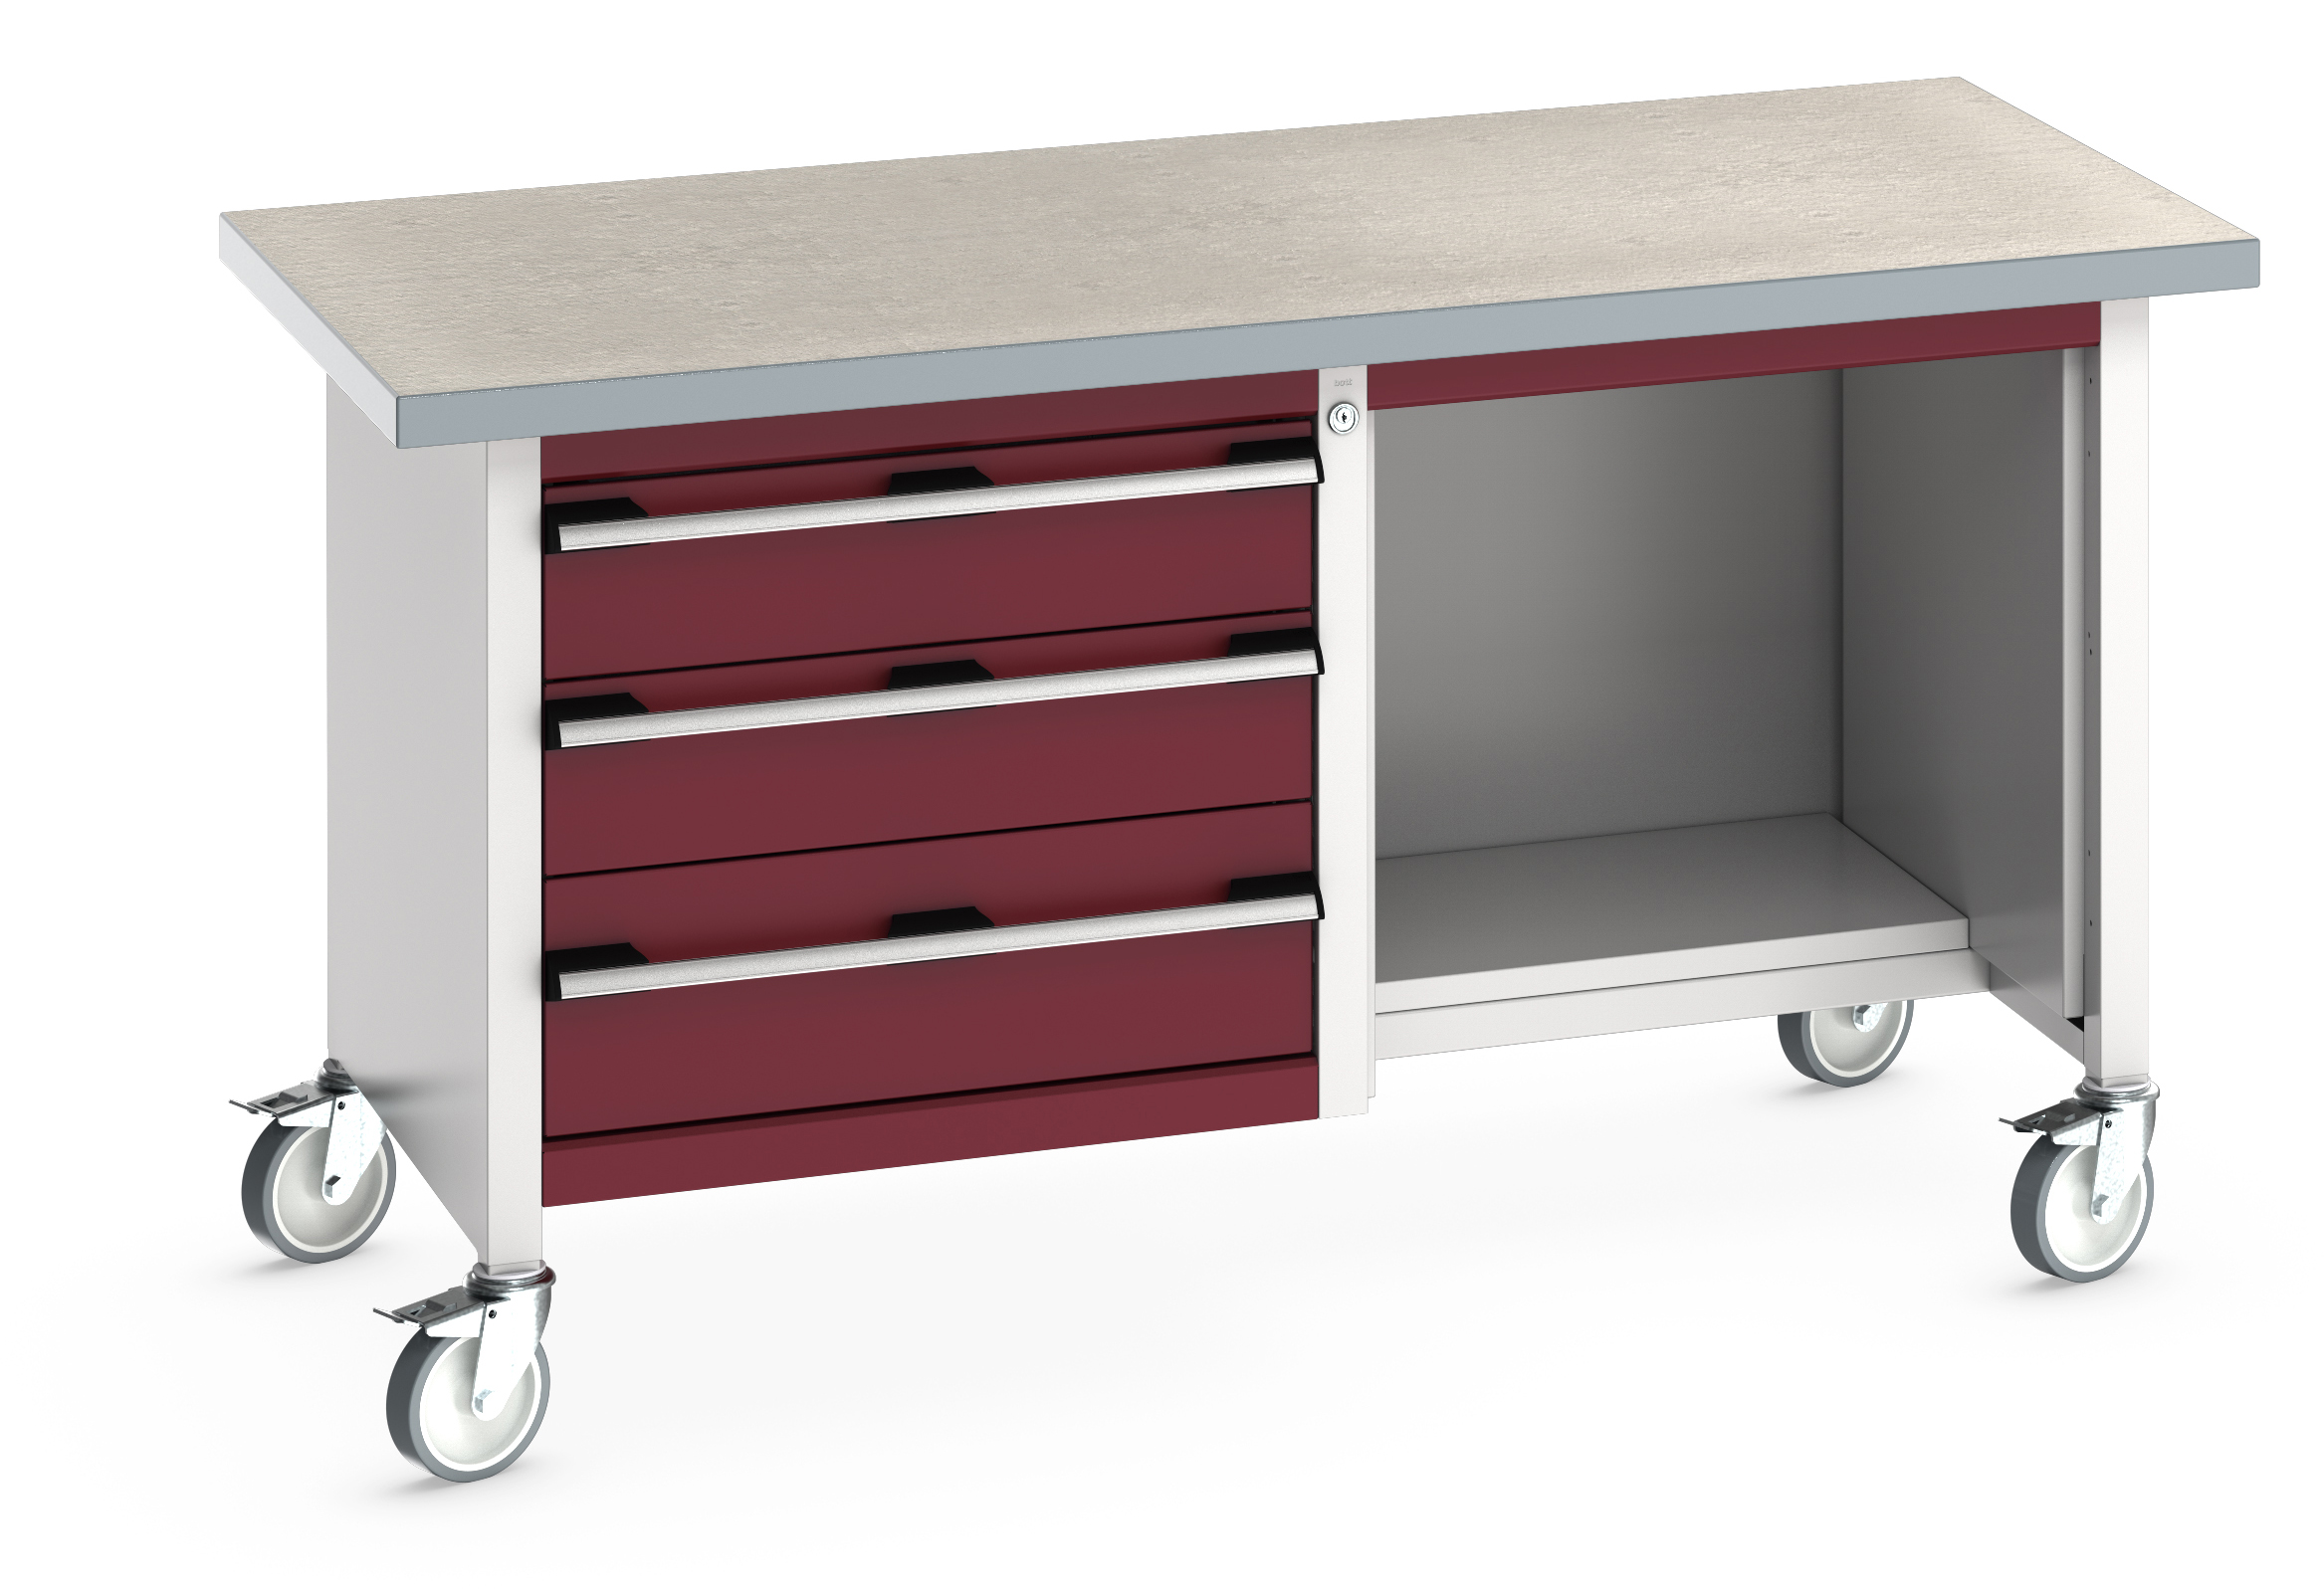 Bott Cubio Mobile Storage Bench With 3 Drawer Cabinet / Open With Half Depth Base Shelf - 41002117.24V